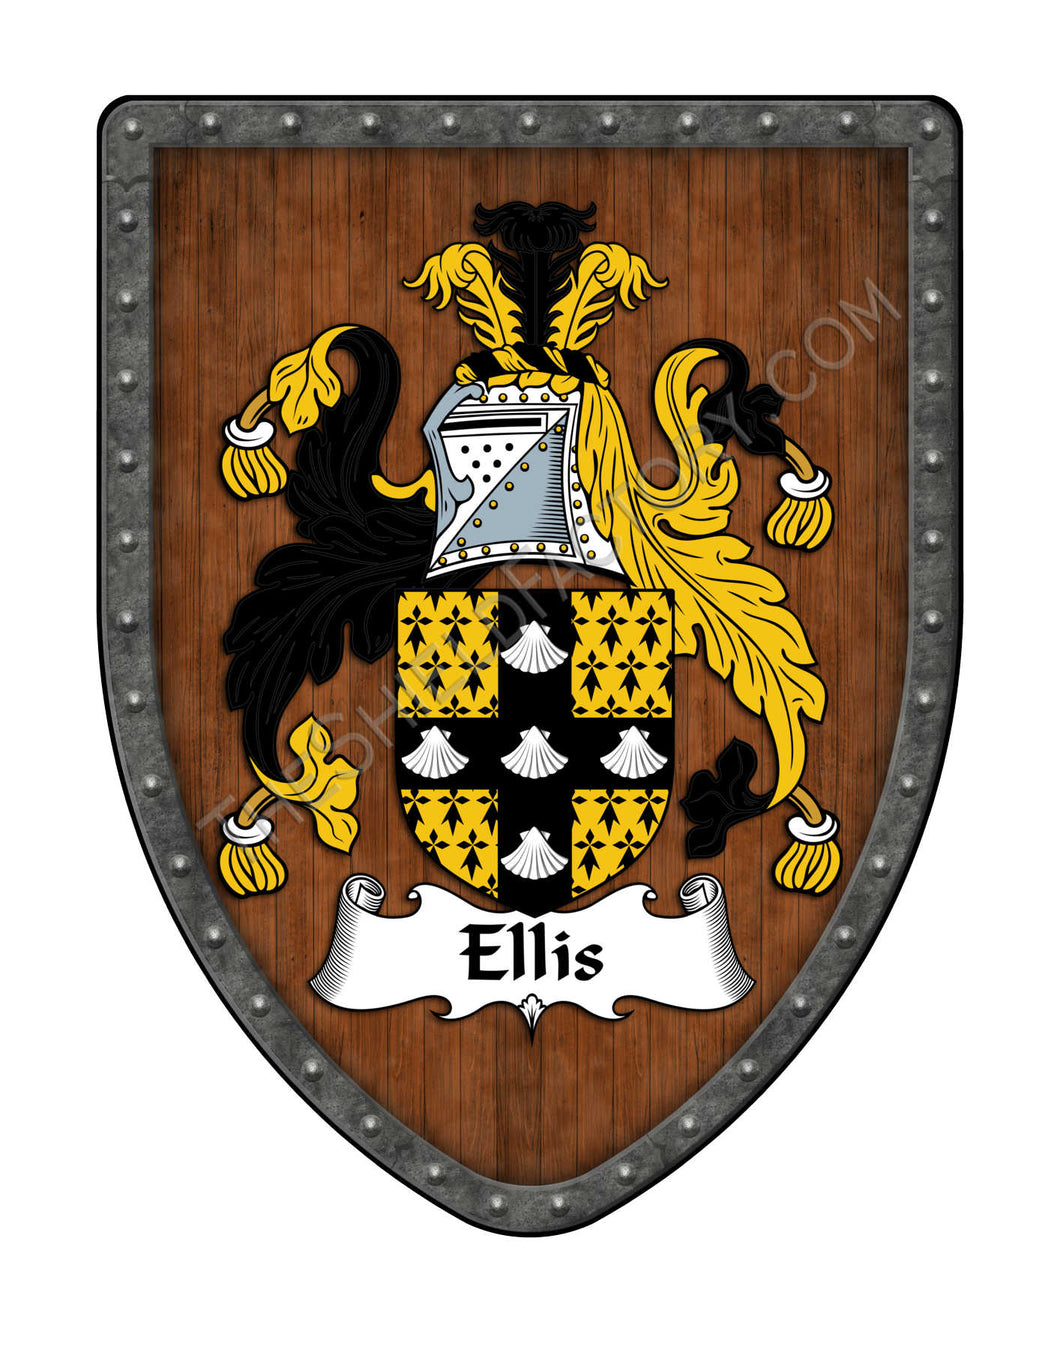 Ellis Custom Family Coat of Arms